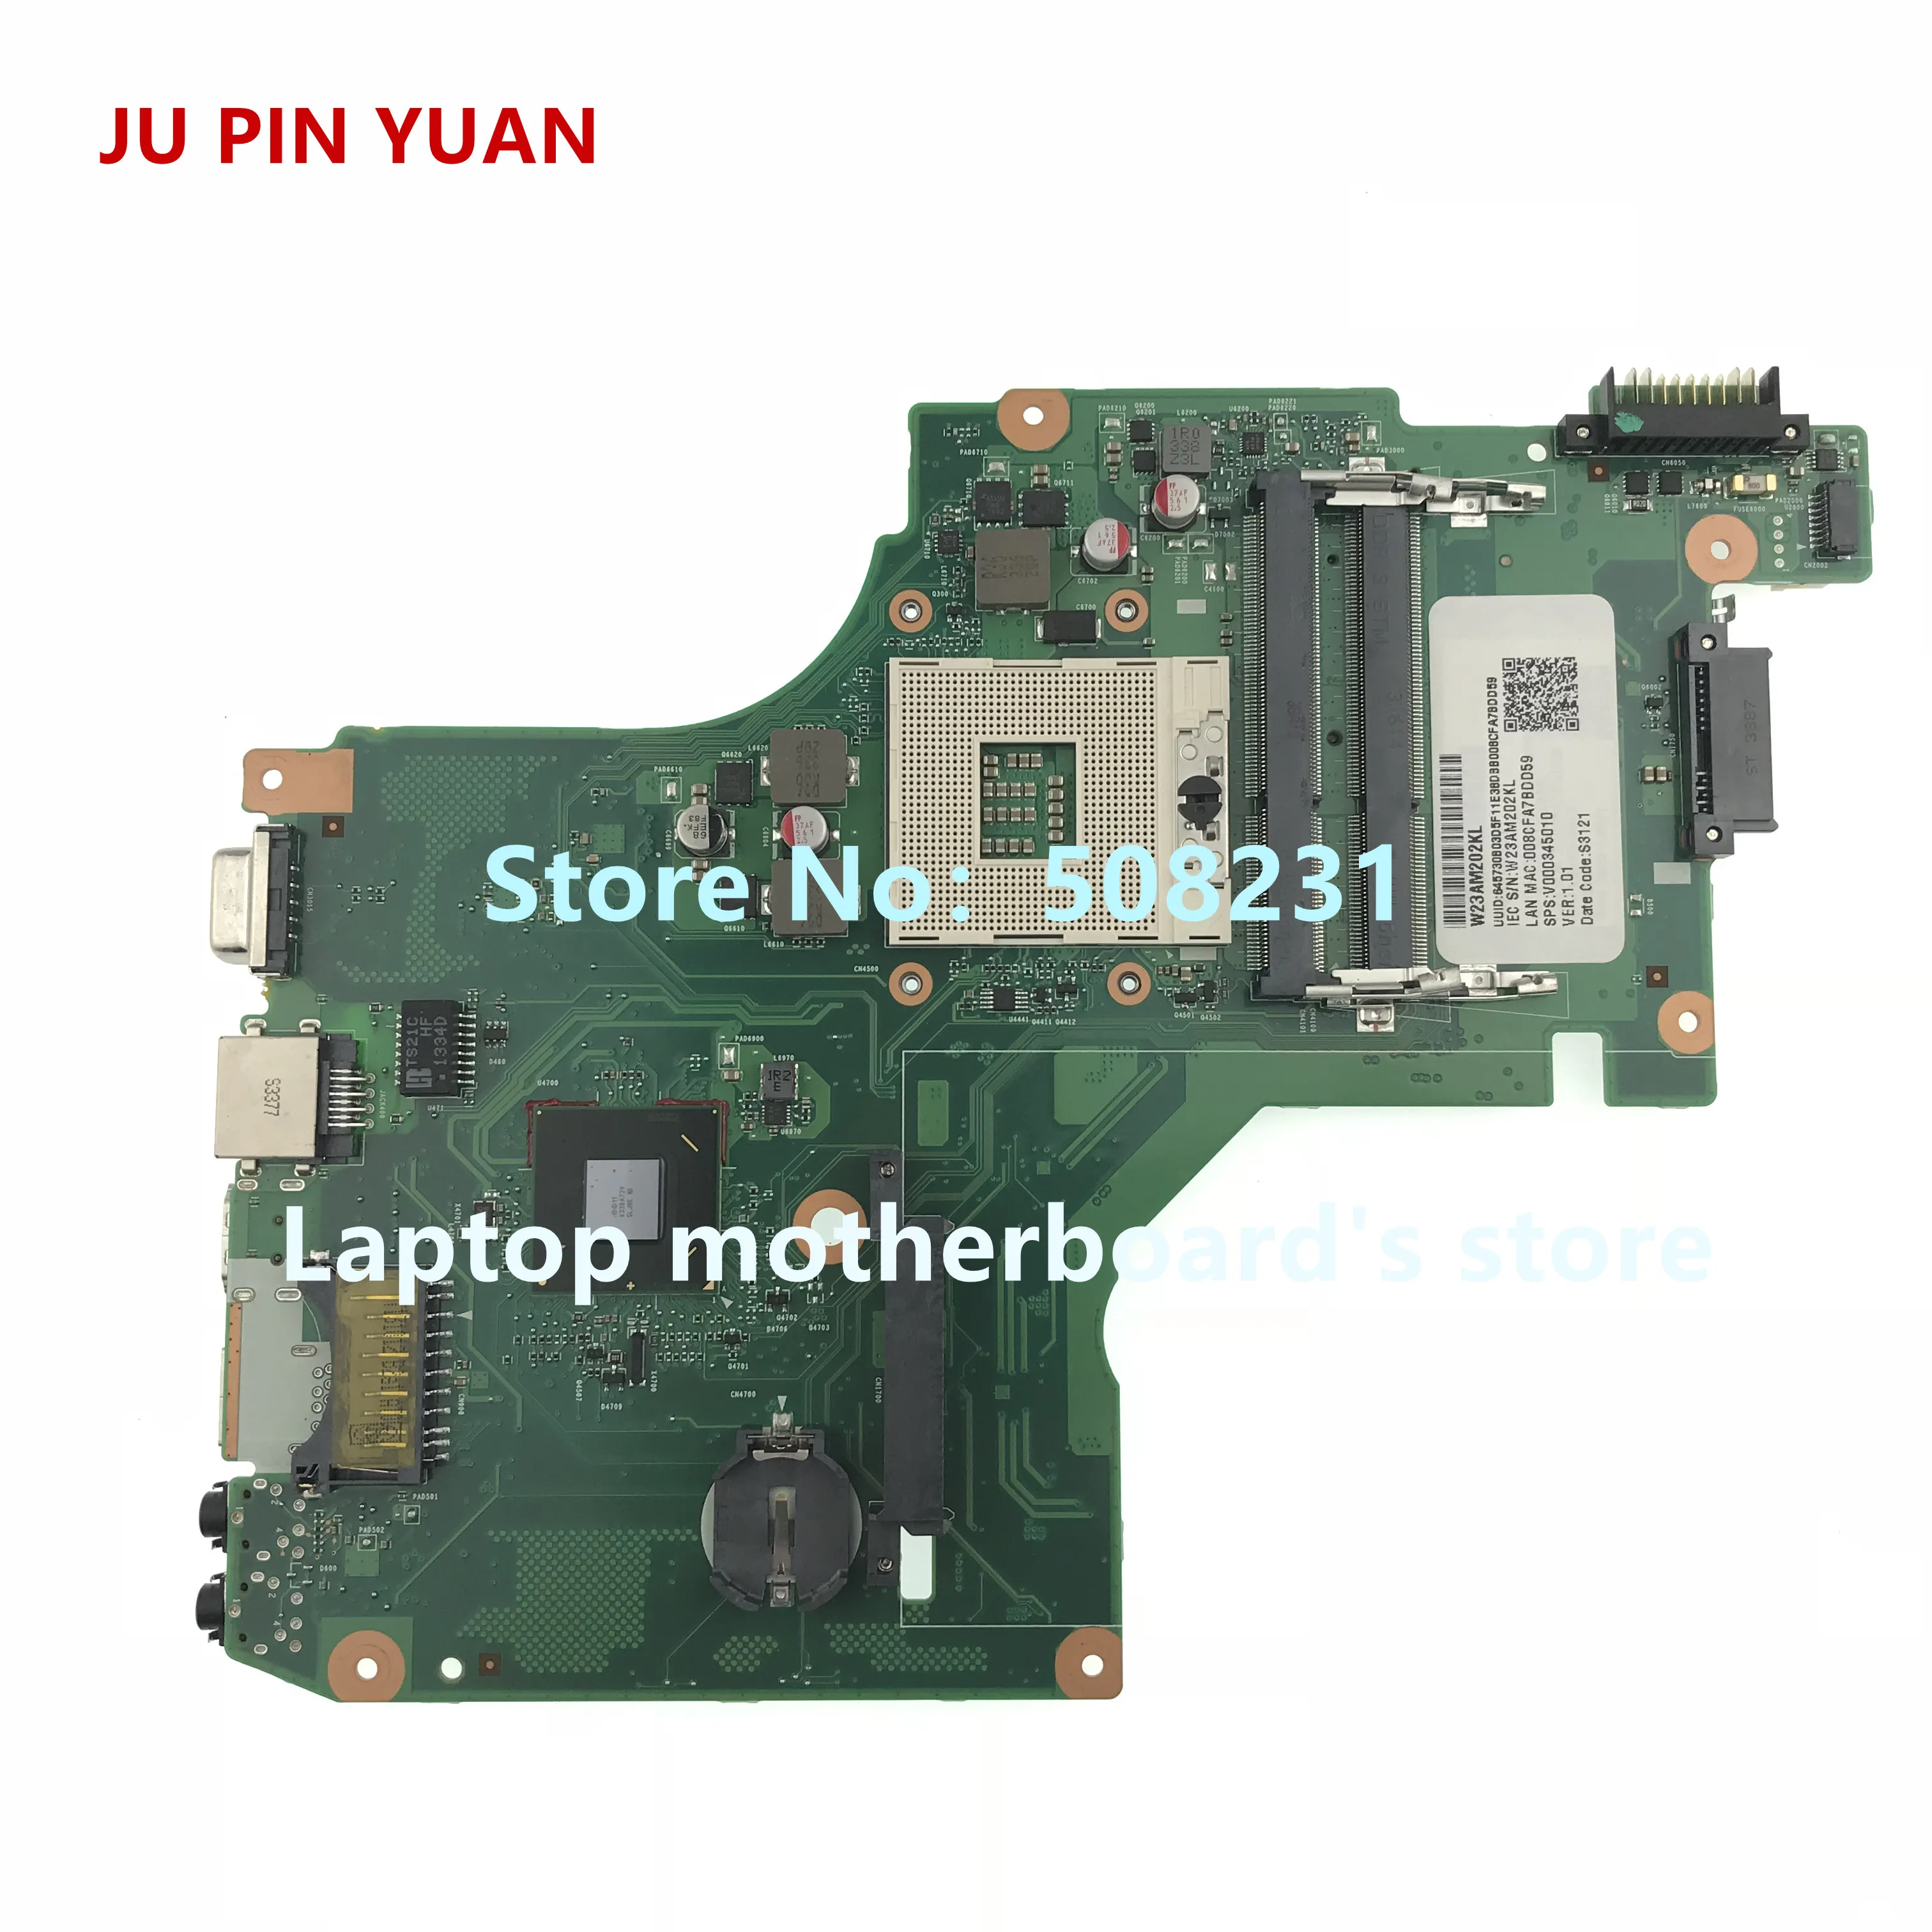 

Ju pin yuan V000345010 для Toshiba Satellite B40 B40-ASP материнская плата для ноутбука 6050A2578201-MB полностью протестирована